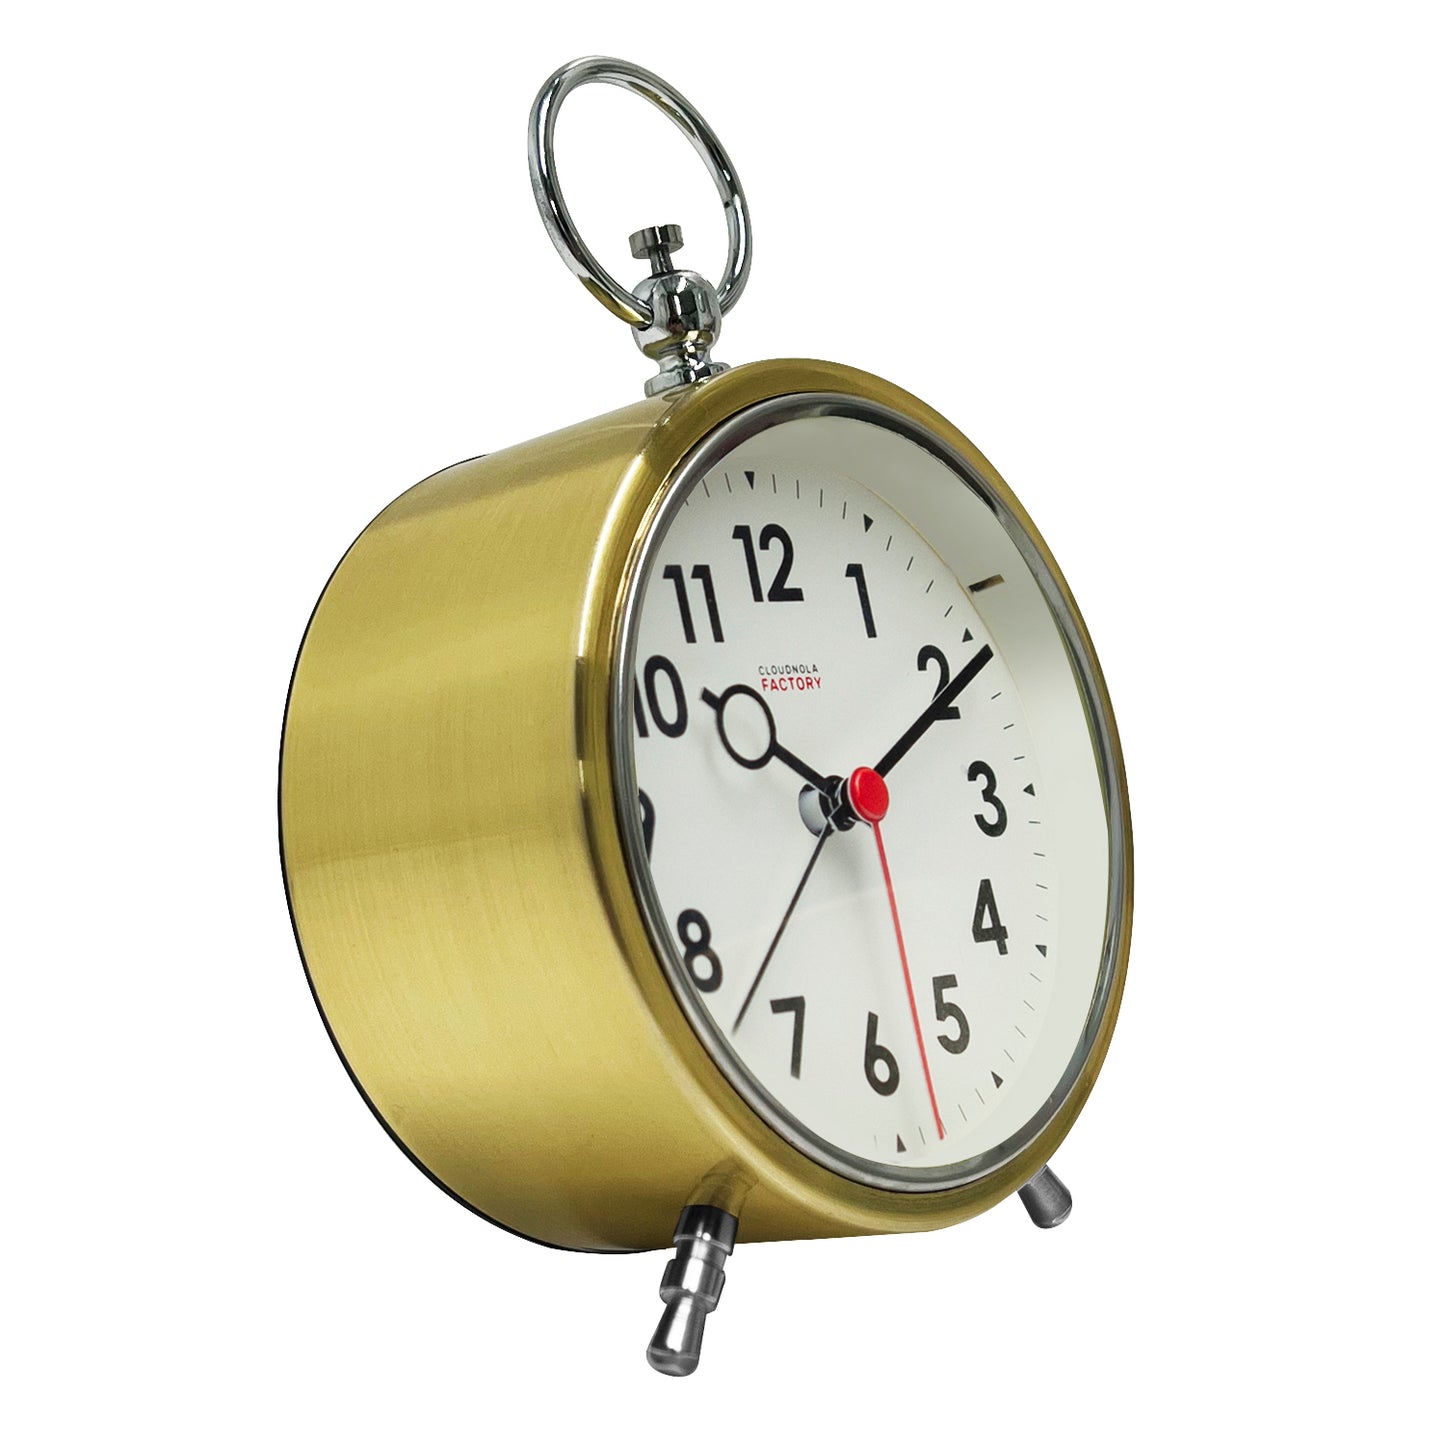 Factory Alarm Gold - Alarm Clock - Silent Mechanism - Snooze - LED